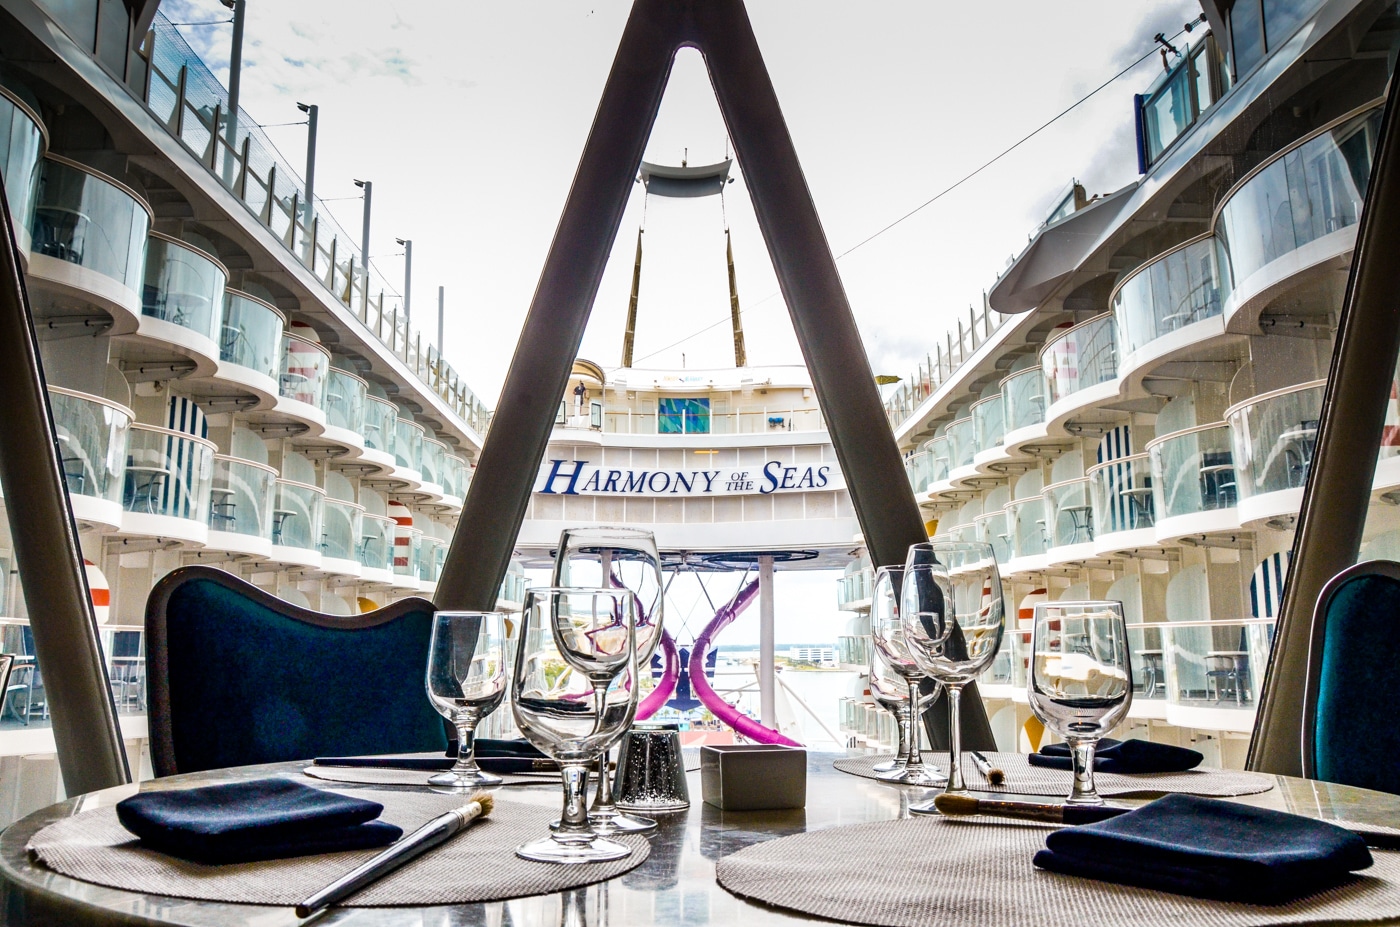 restaurant on harmony of the seas cruise ship